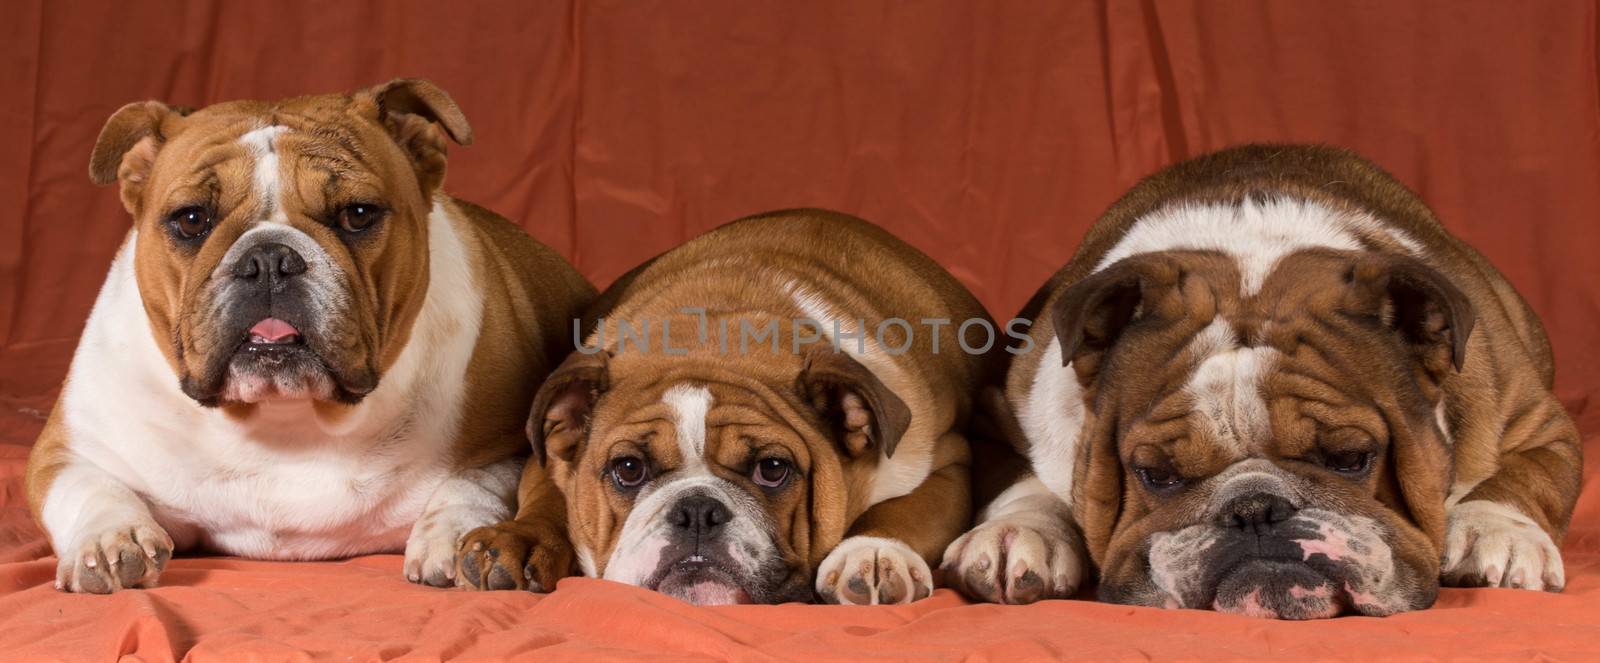 three english bulldogs laying down together